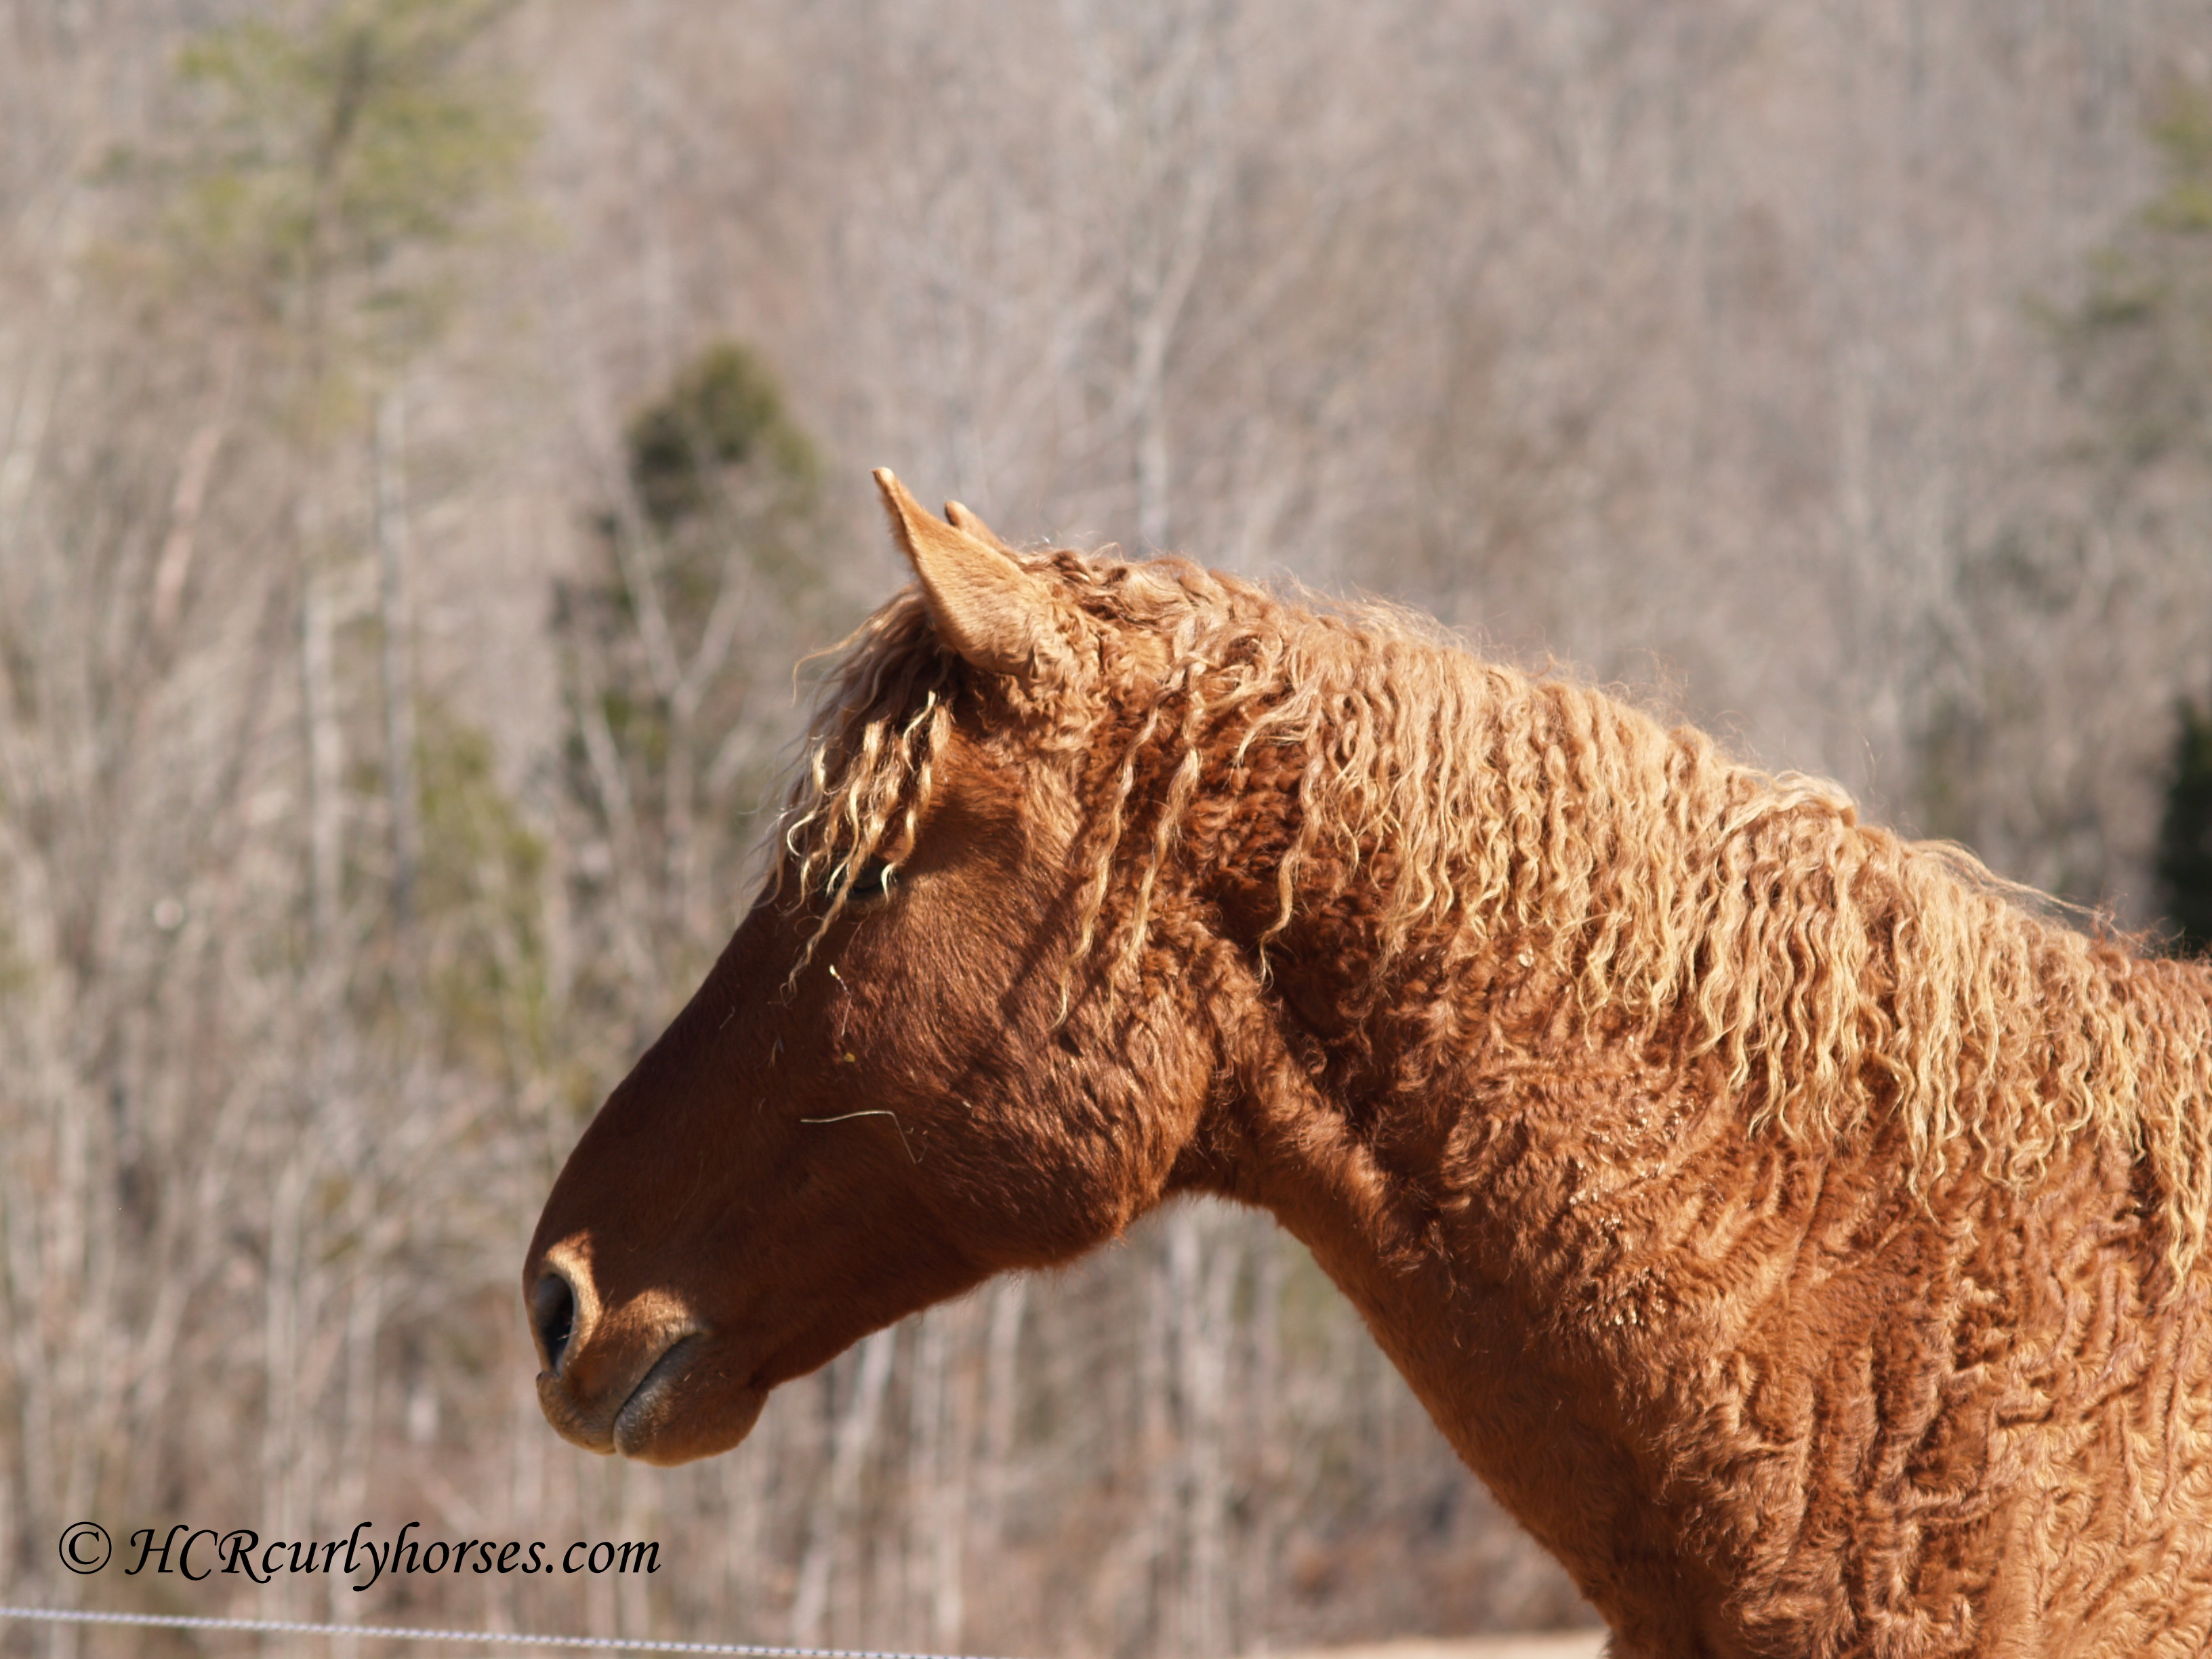 American Bashkir Curly Horse